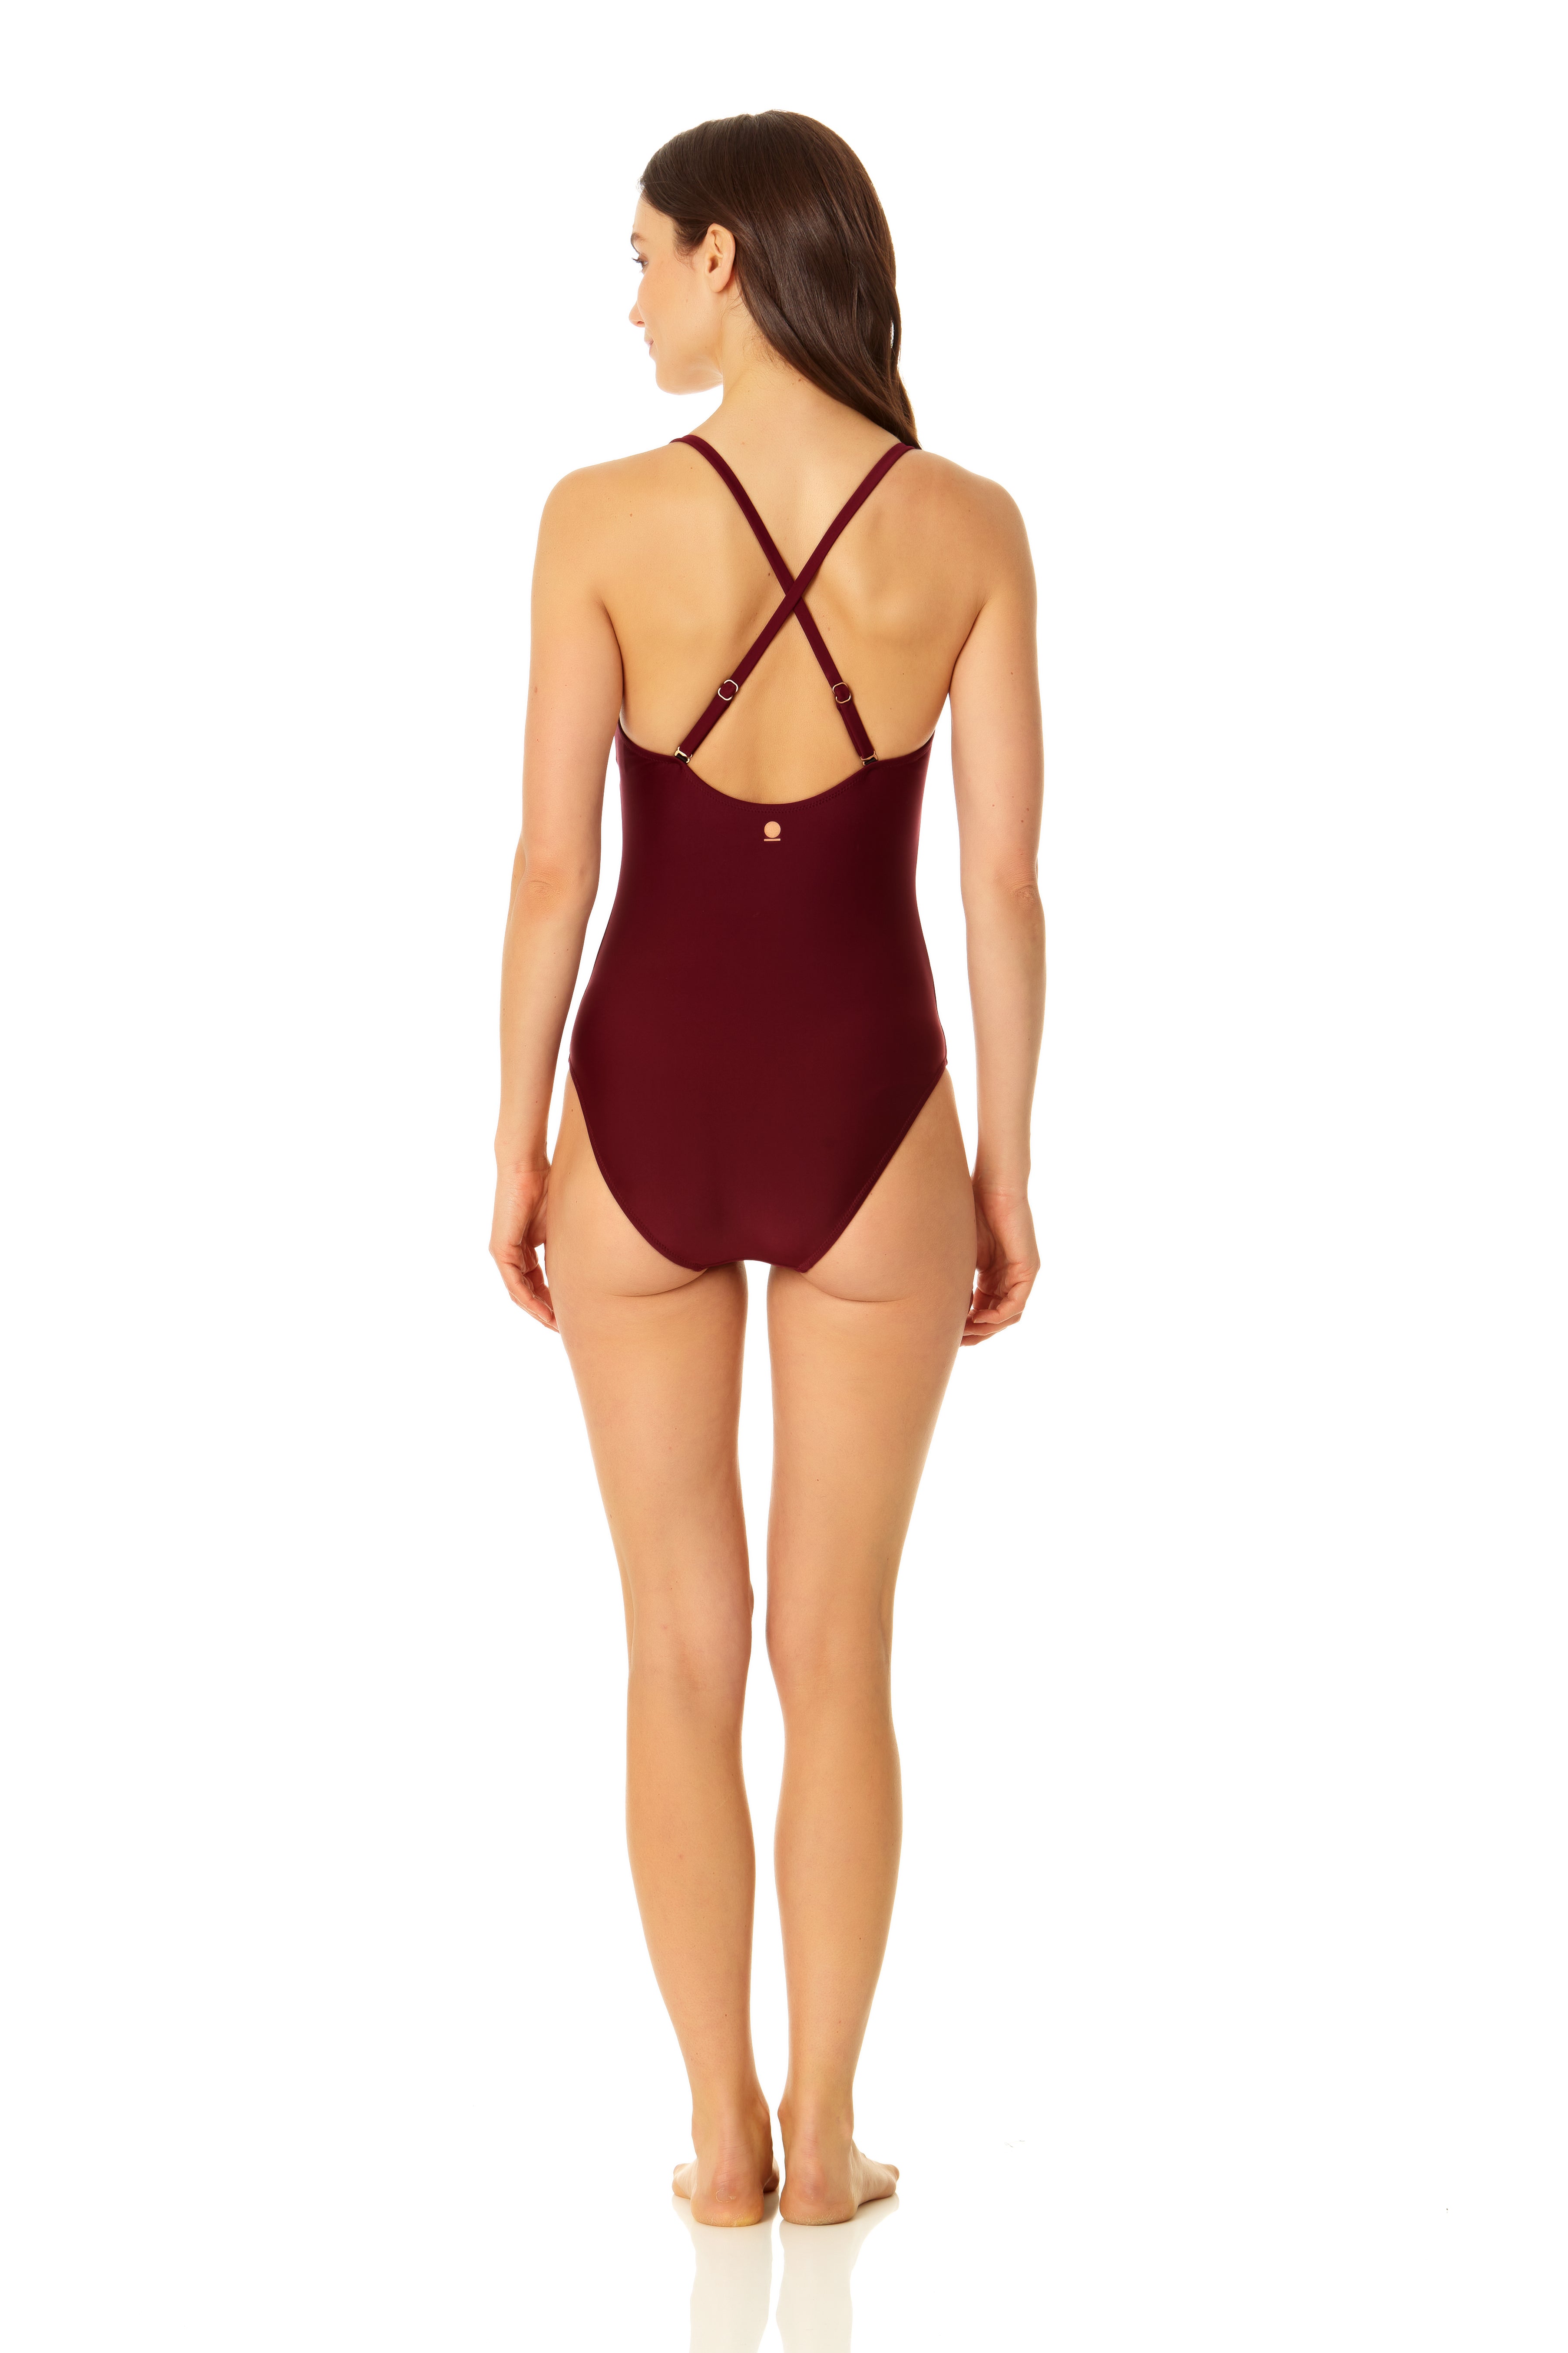 Coppersuit - Women's Convertible Cross Back One Piece Swimsuit